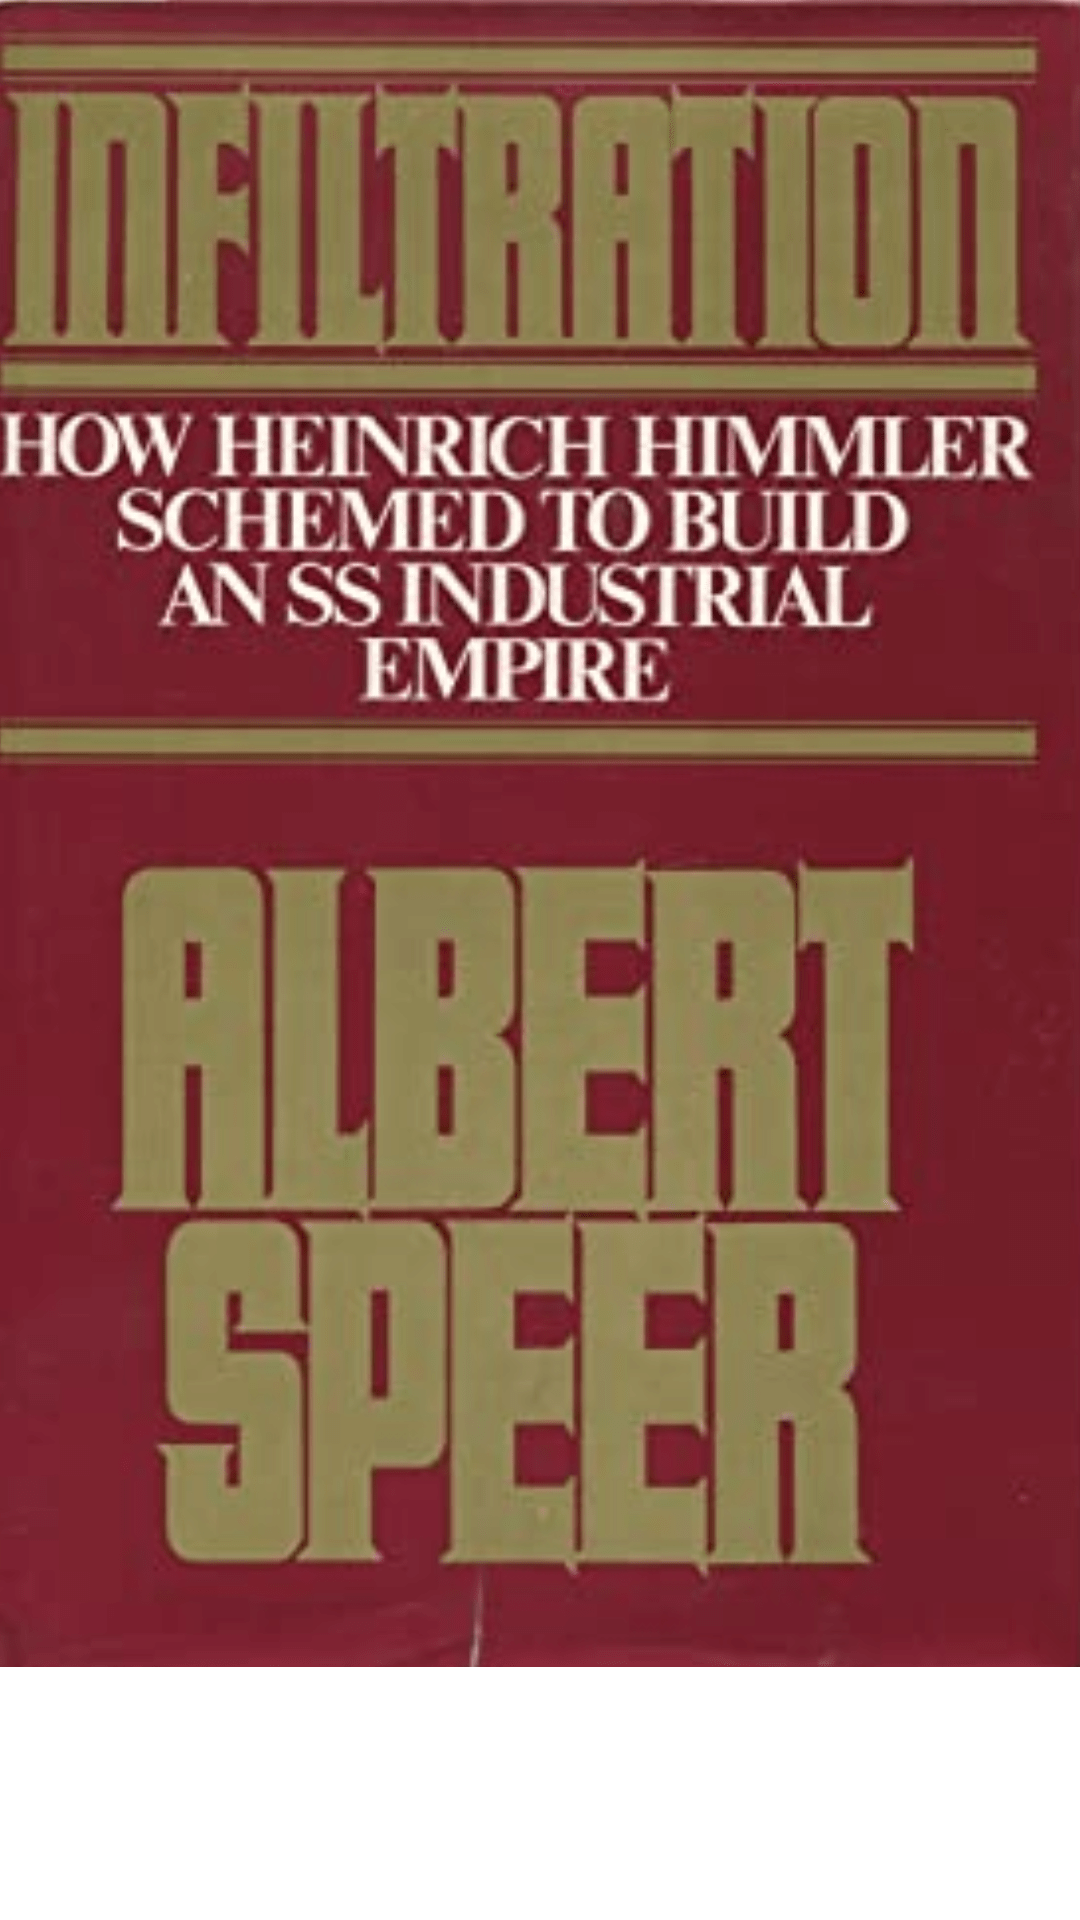 Infiltration by Albert Speer